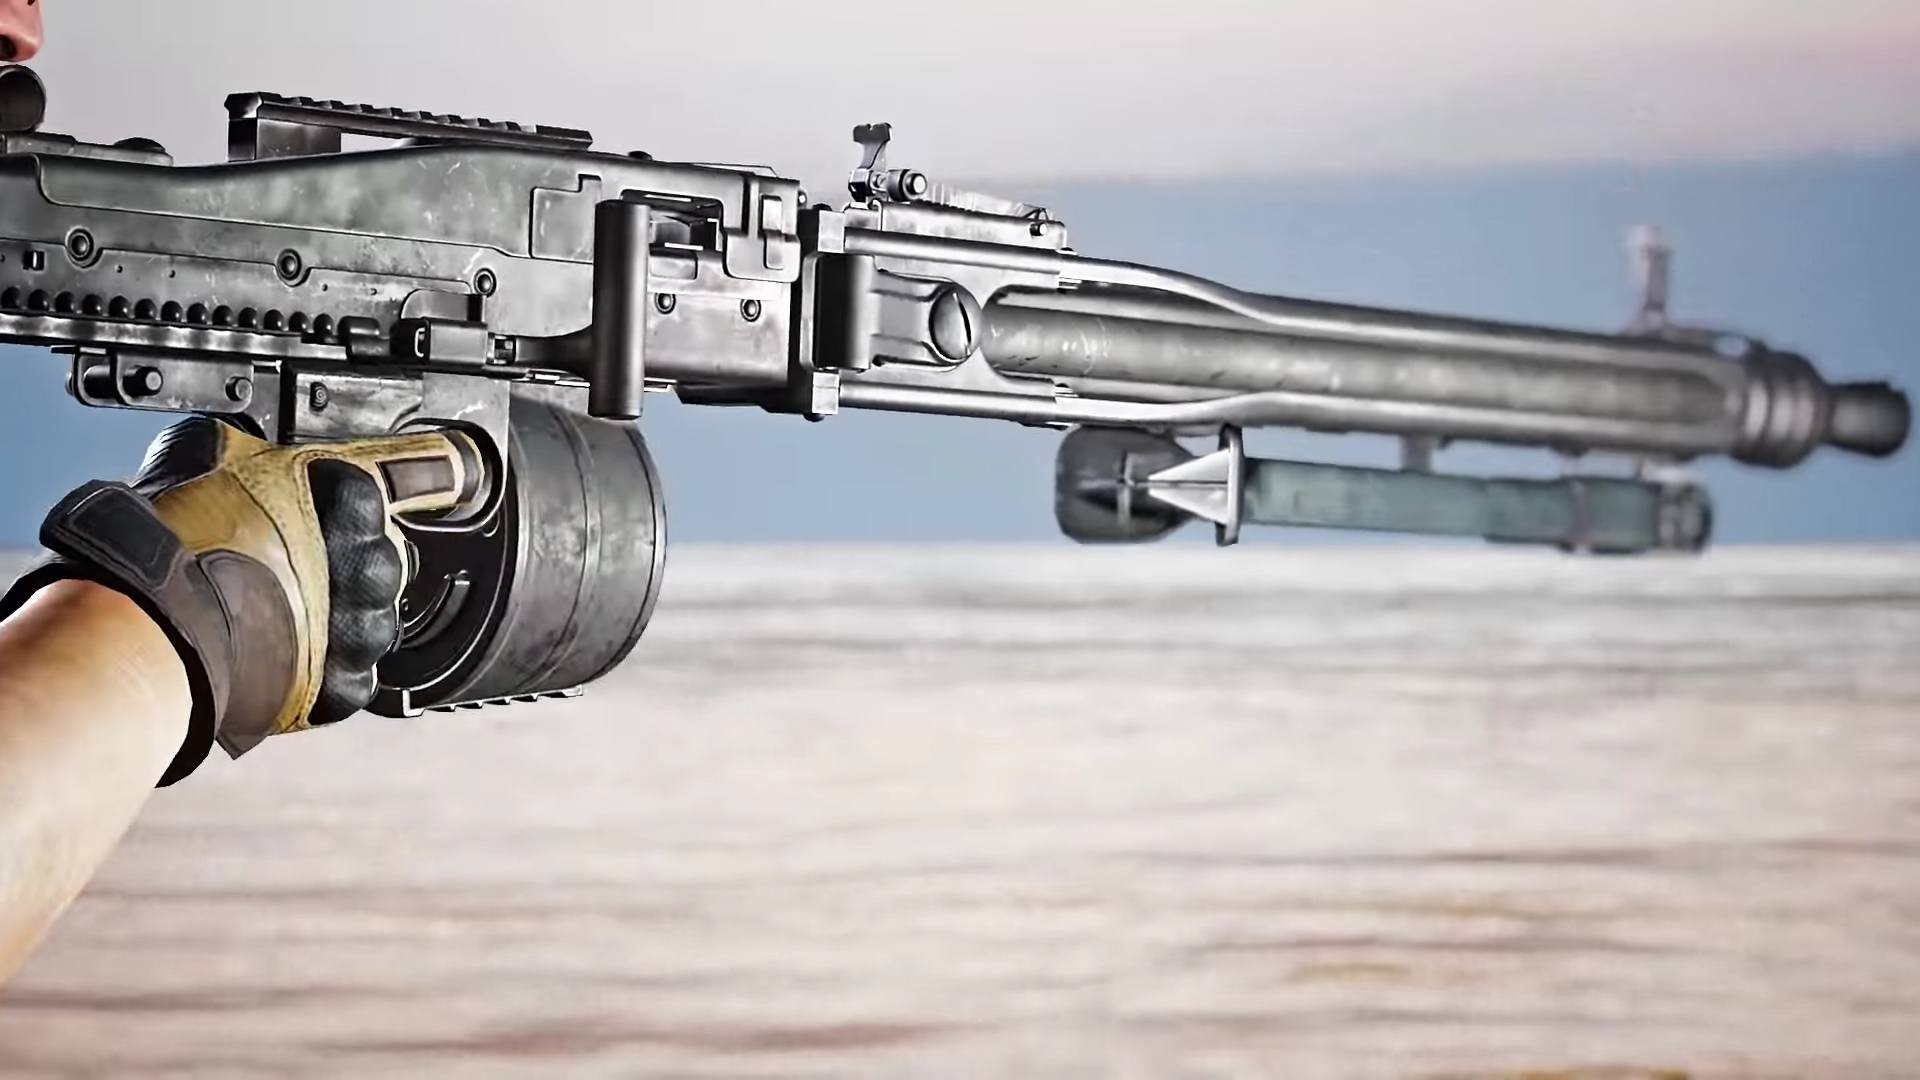 PUBG Mobile Weapon Comparison: MG3 LMG Vs M249 LMG